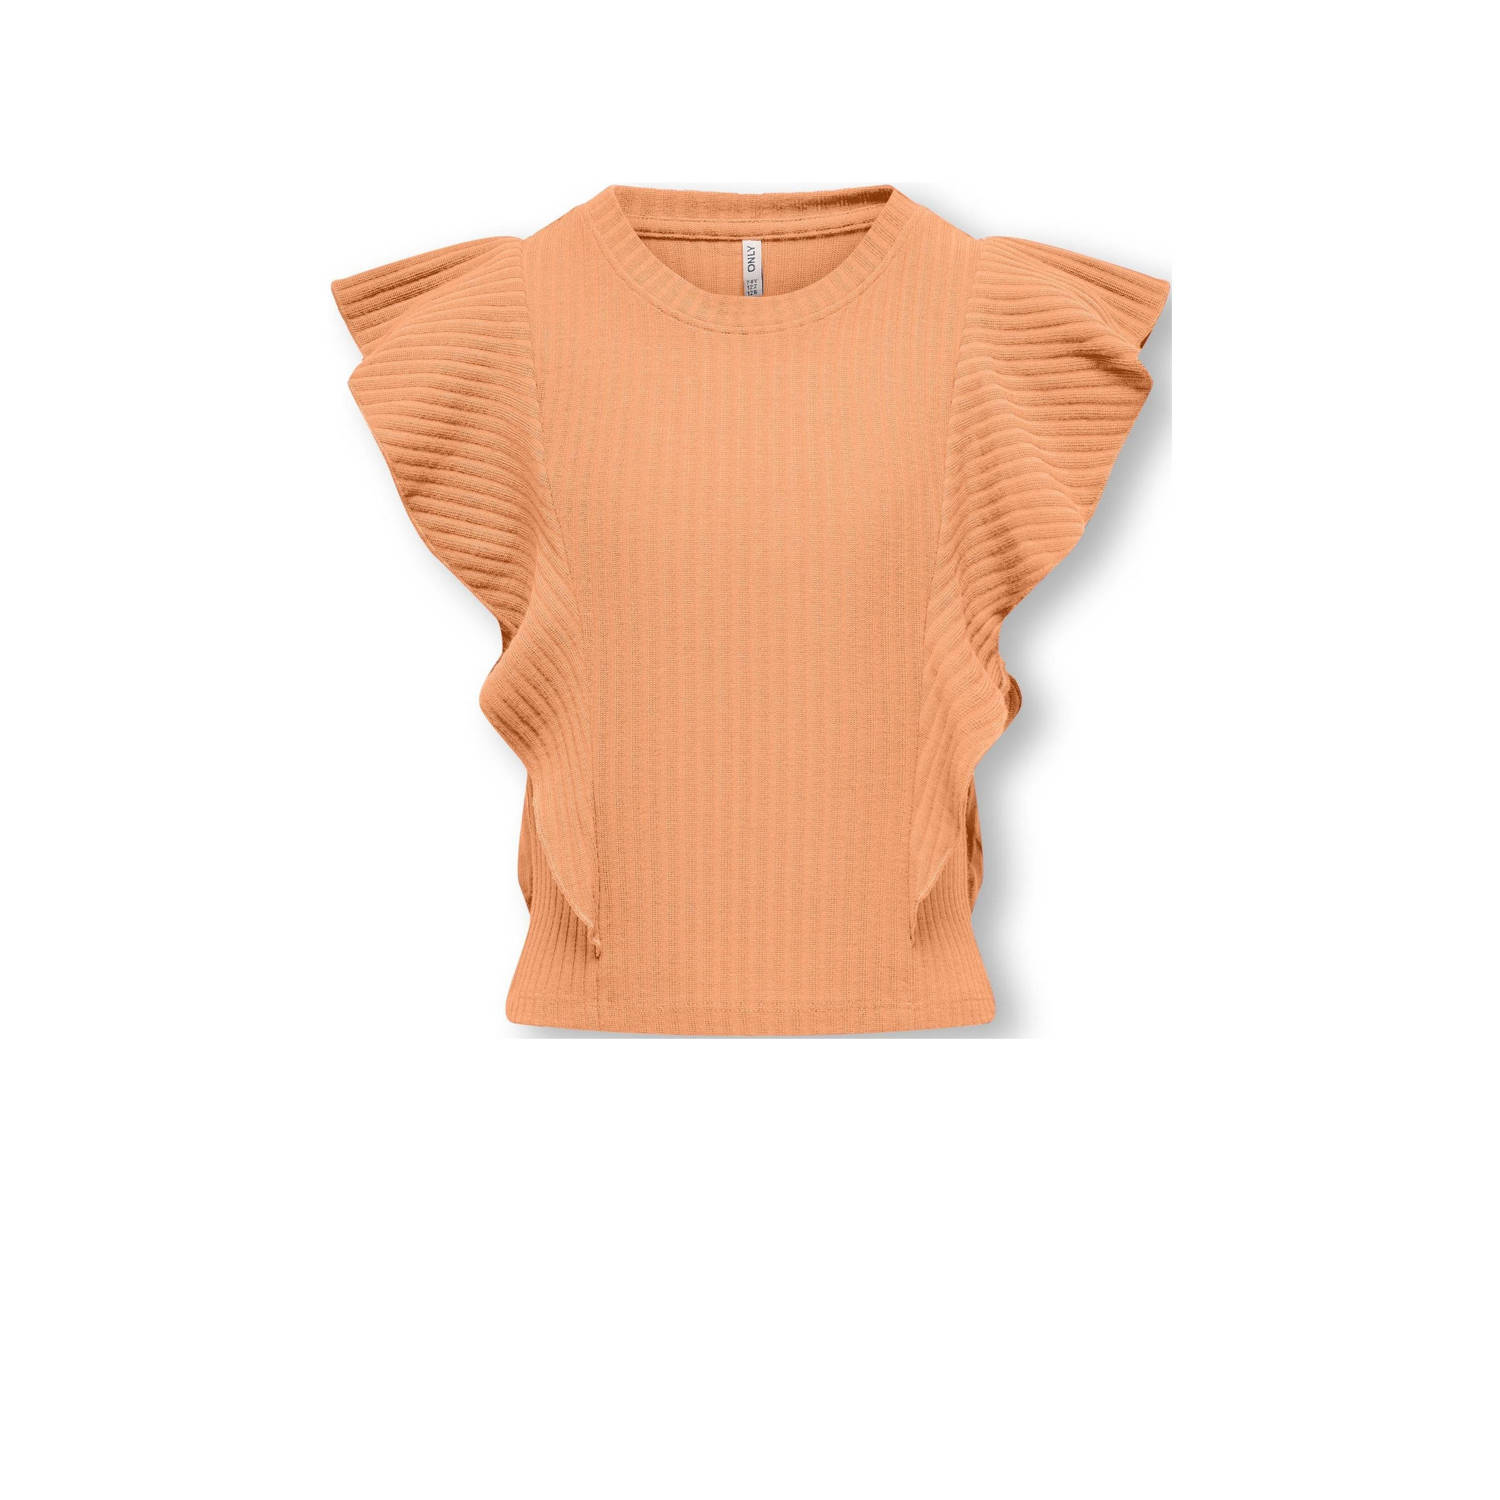 Only KIDS GIRL T-shirt KOGNELLA oranje Top Meisjes Polyester Ronde hals 110 116